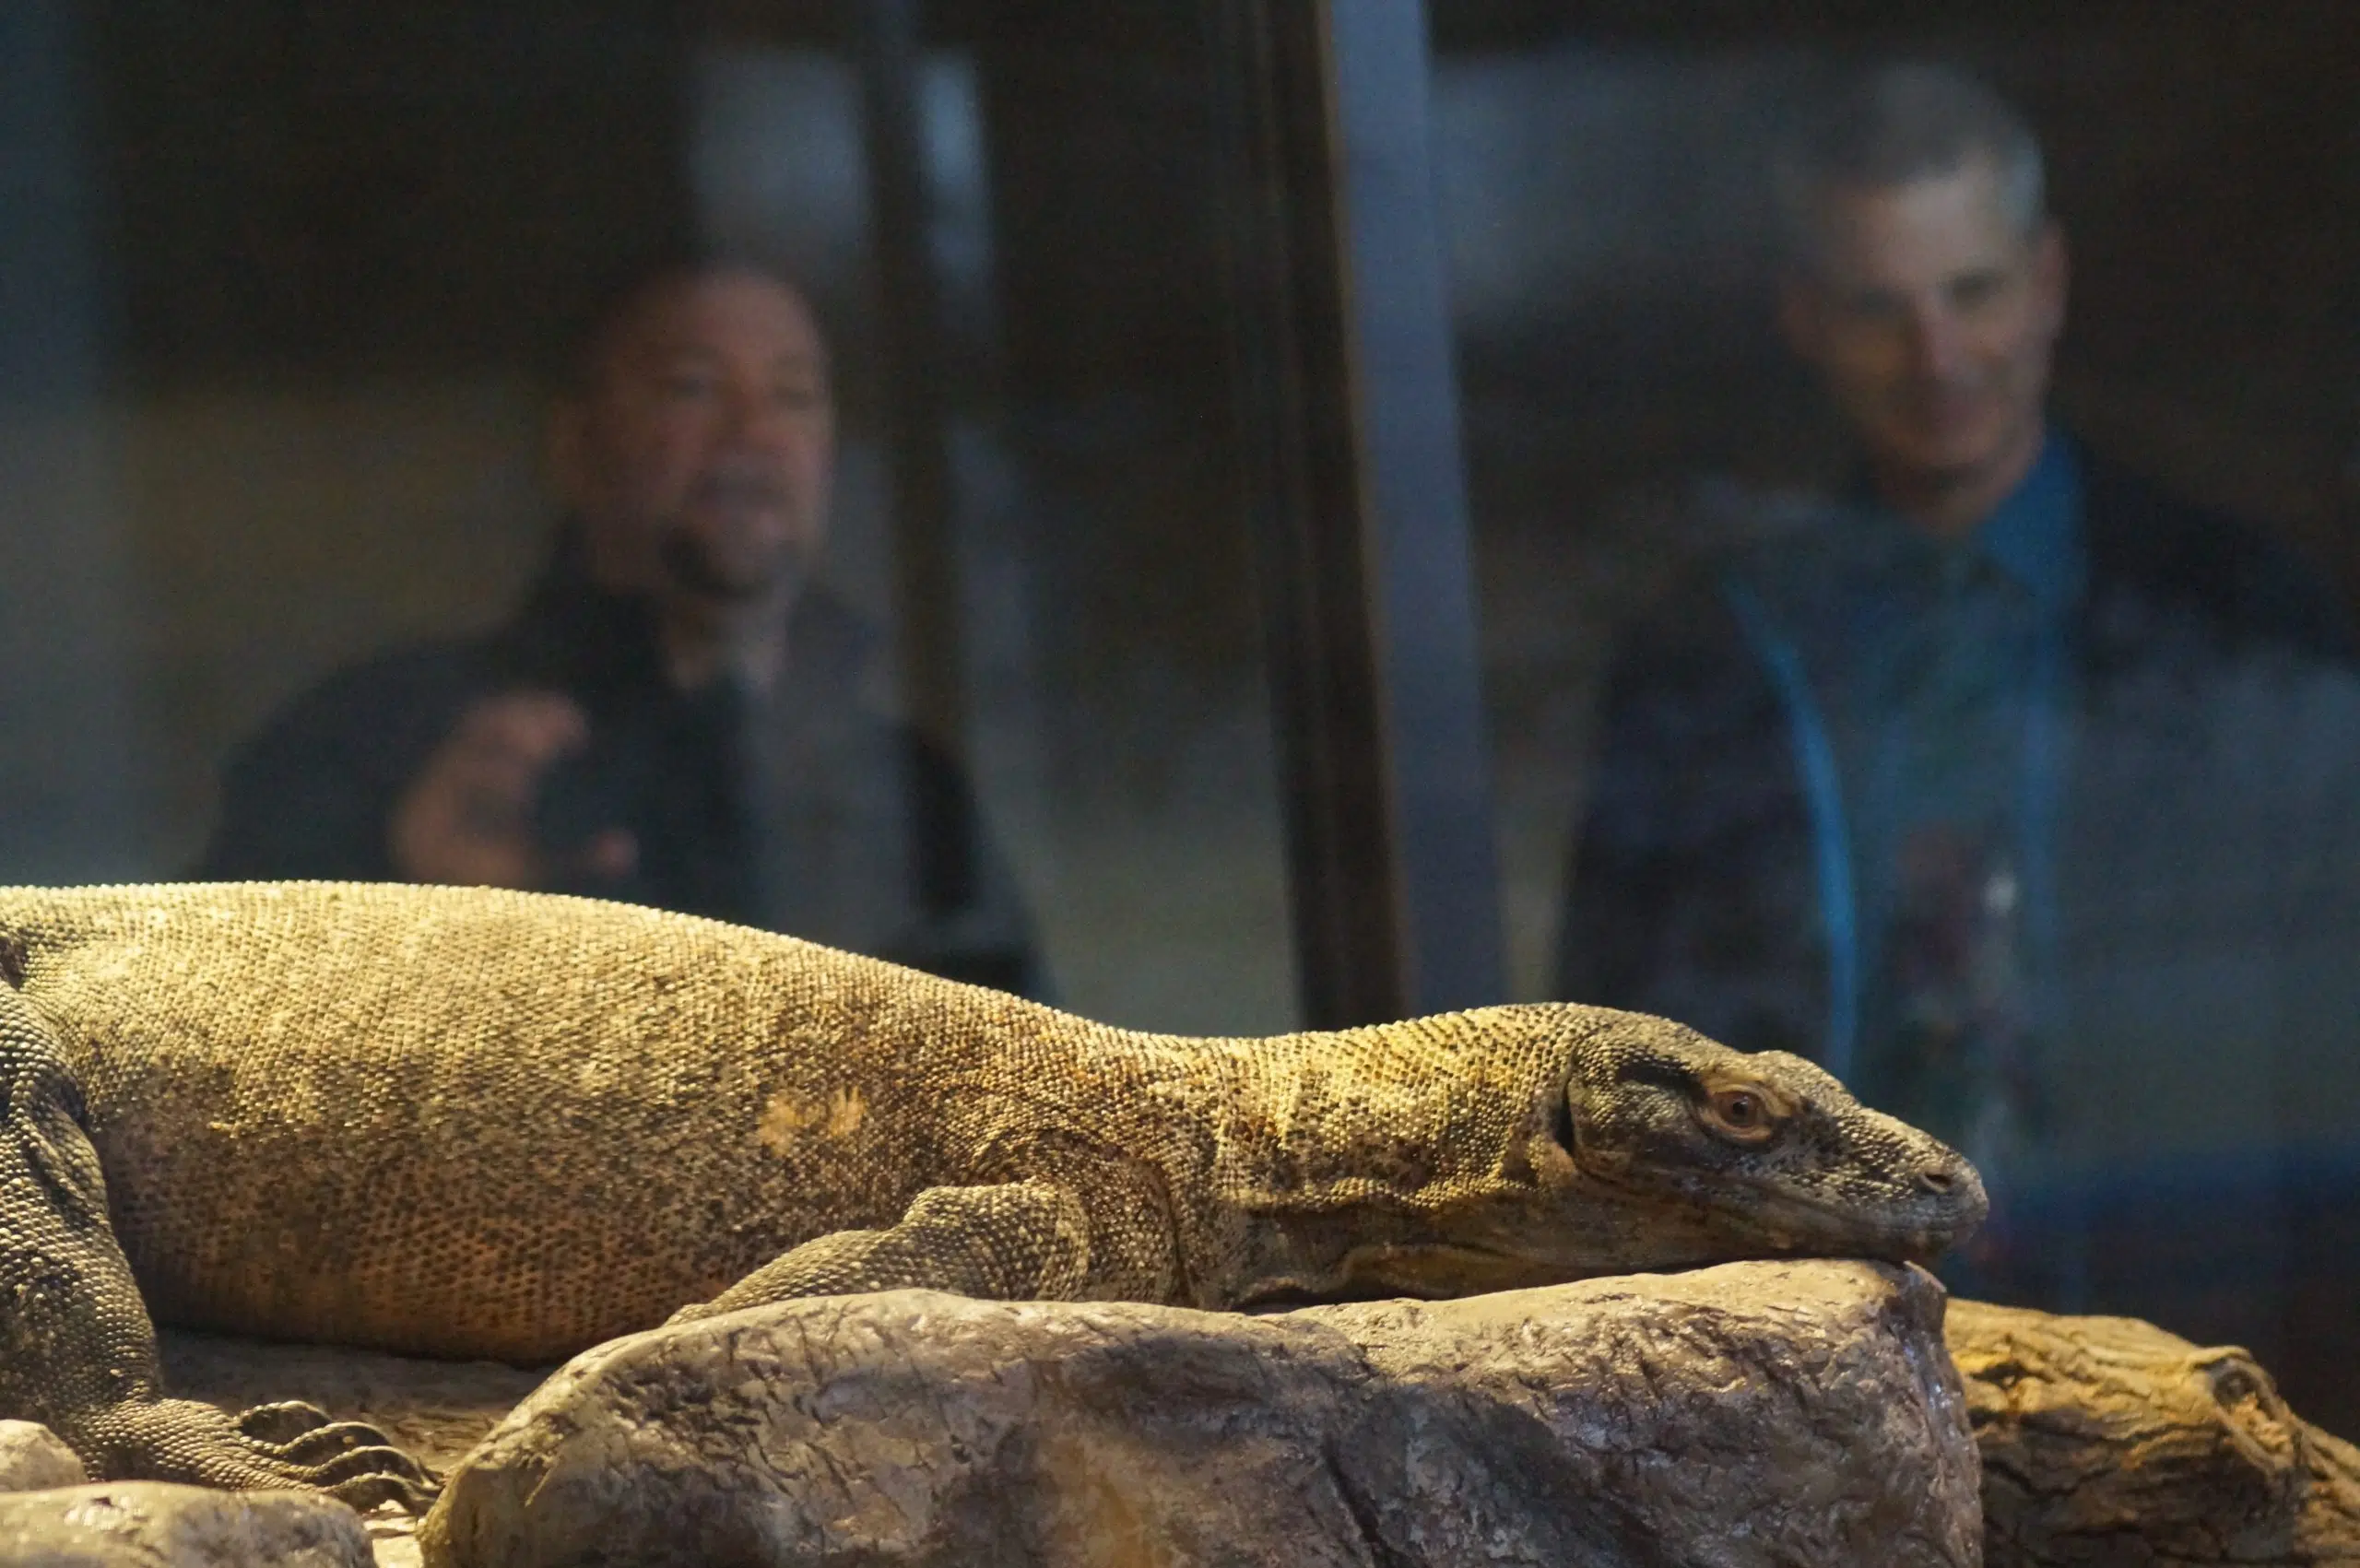 Komodo dragons settle into new home at Saskatoon zoo